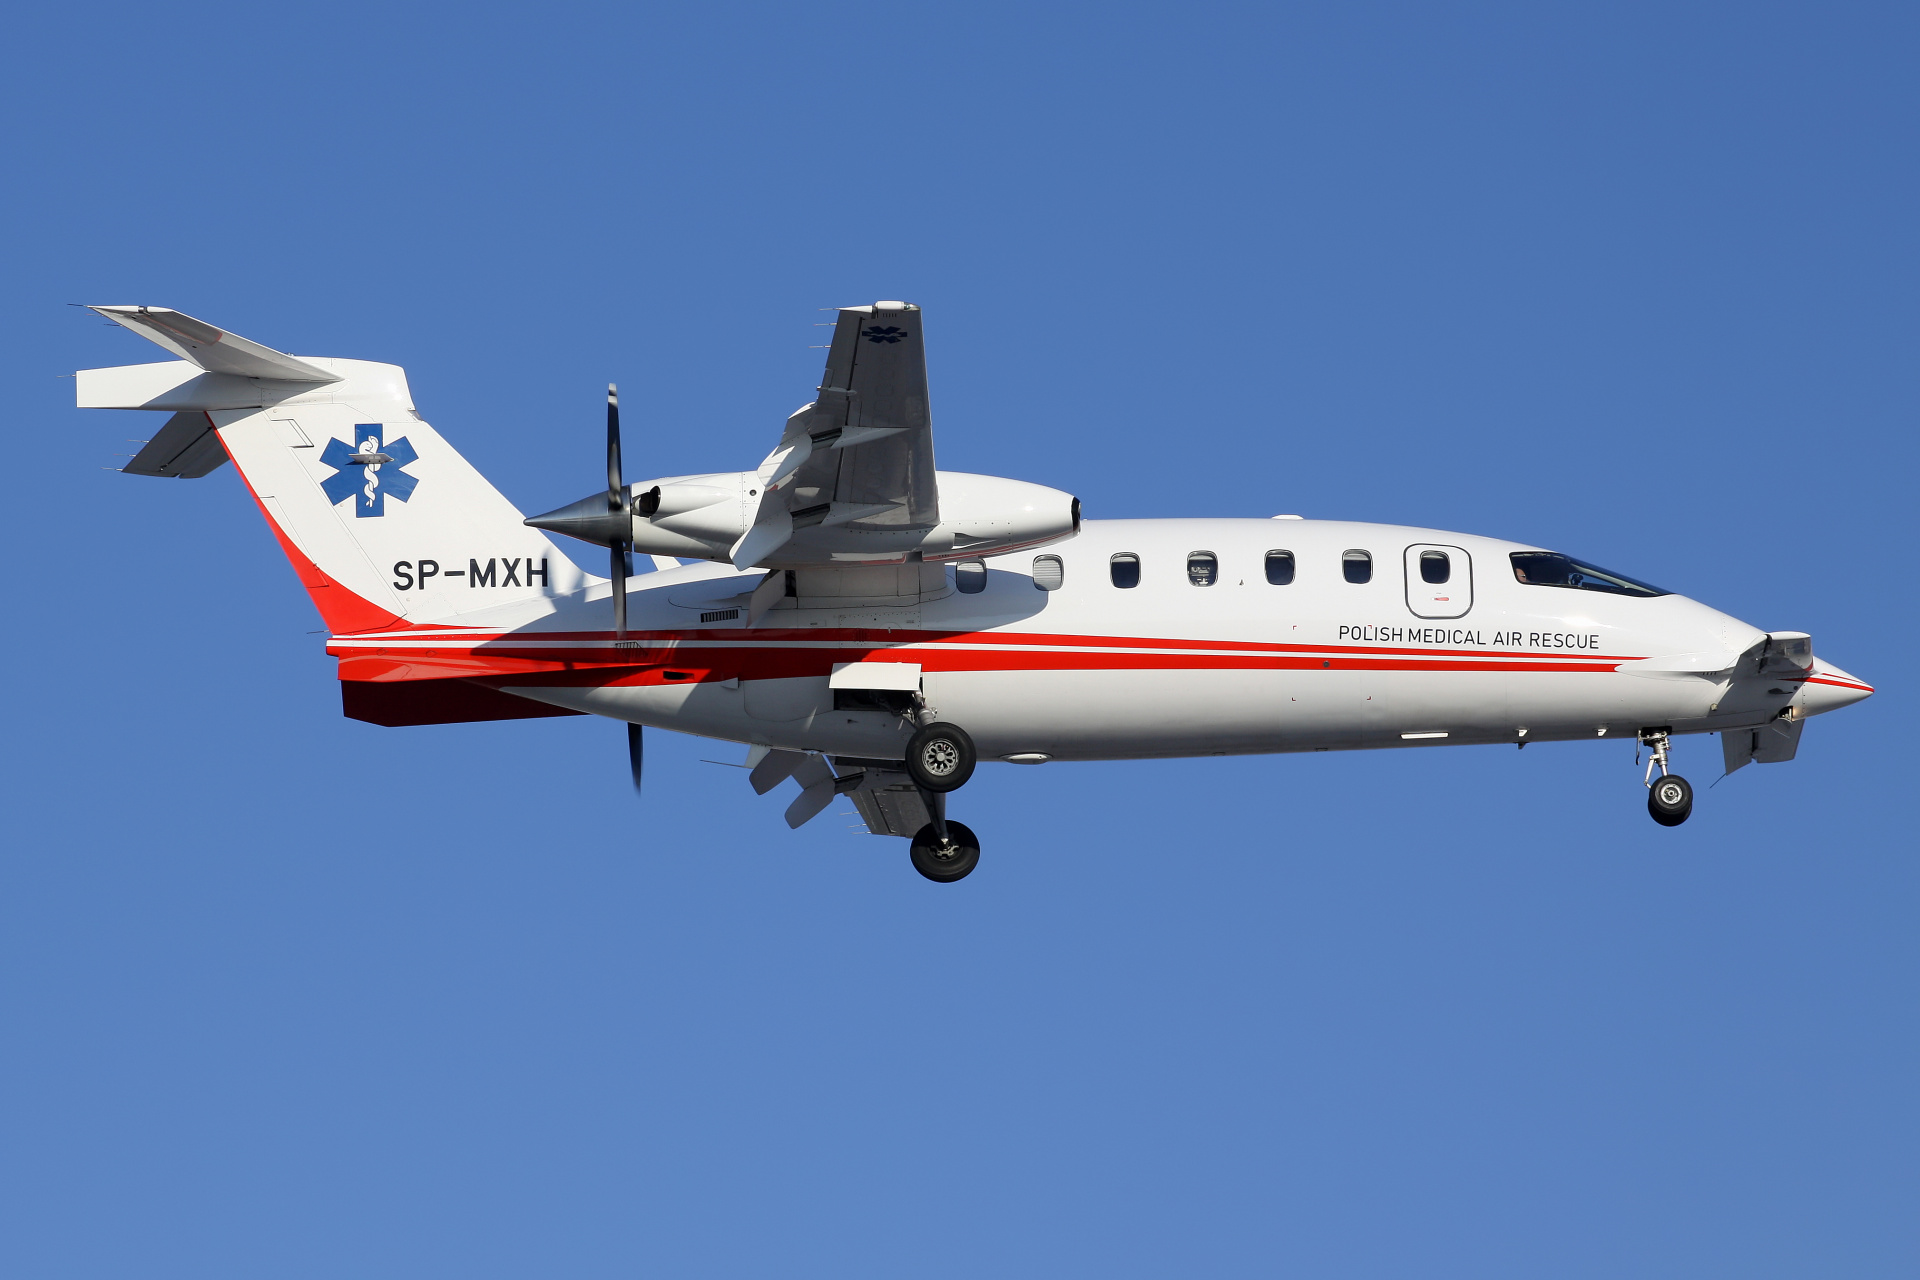 SP-MXH, Polish Medical Air Rescue (Aircraft » EPWA Spotting » Piaggio P.180 Avanti)